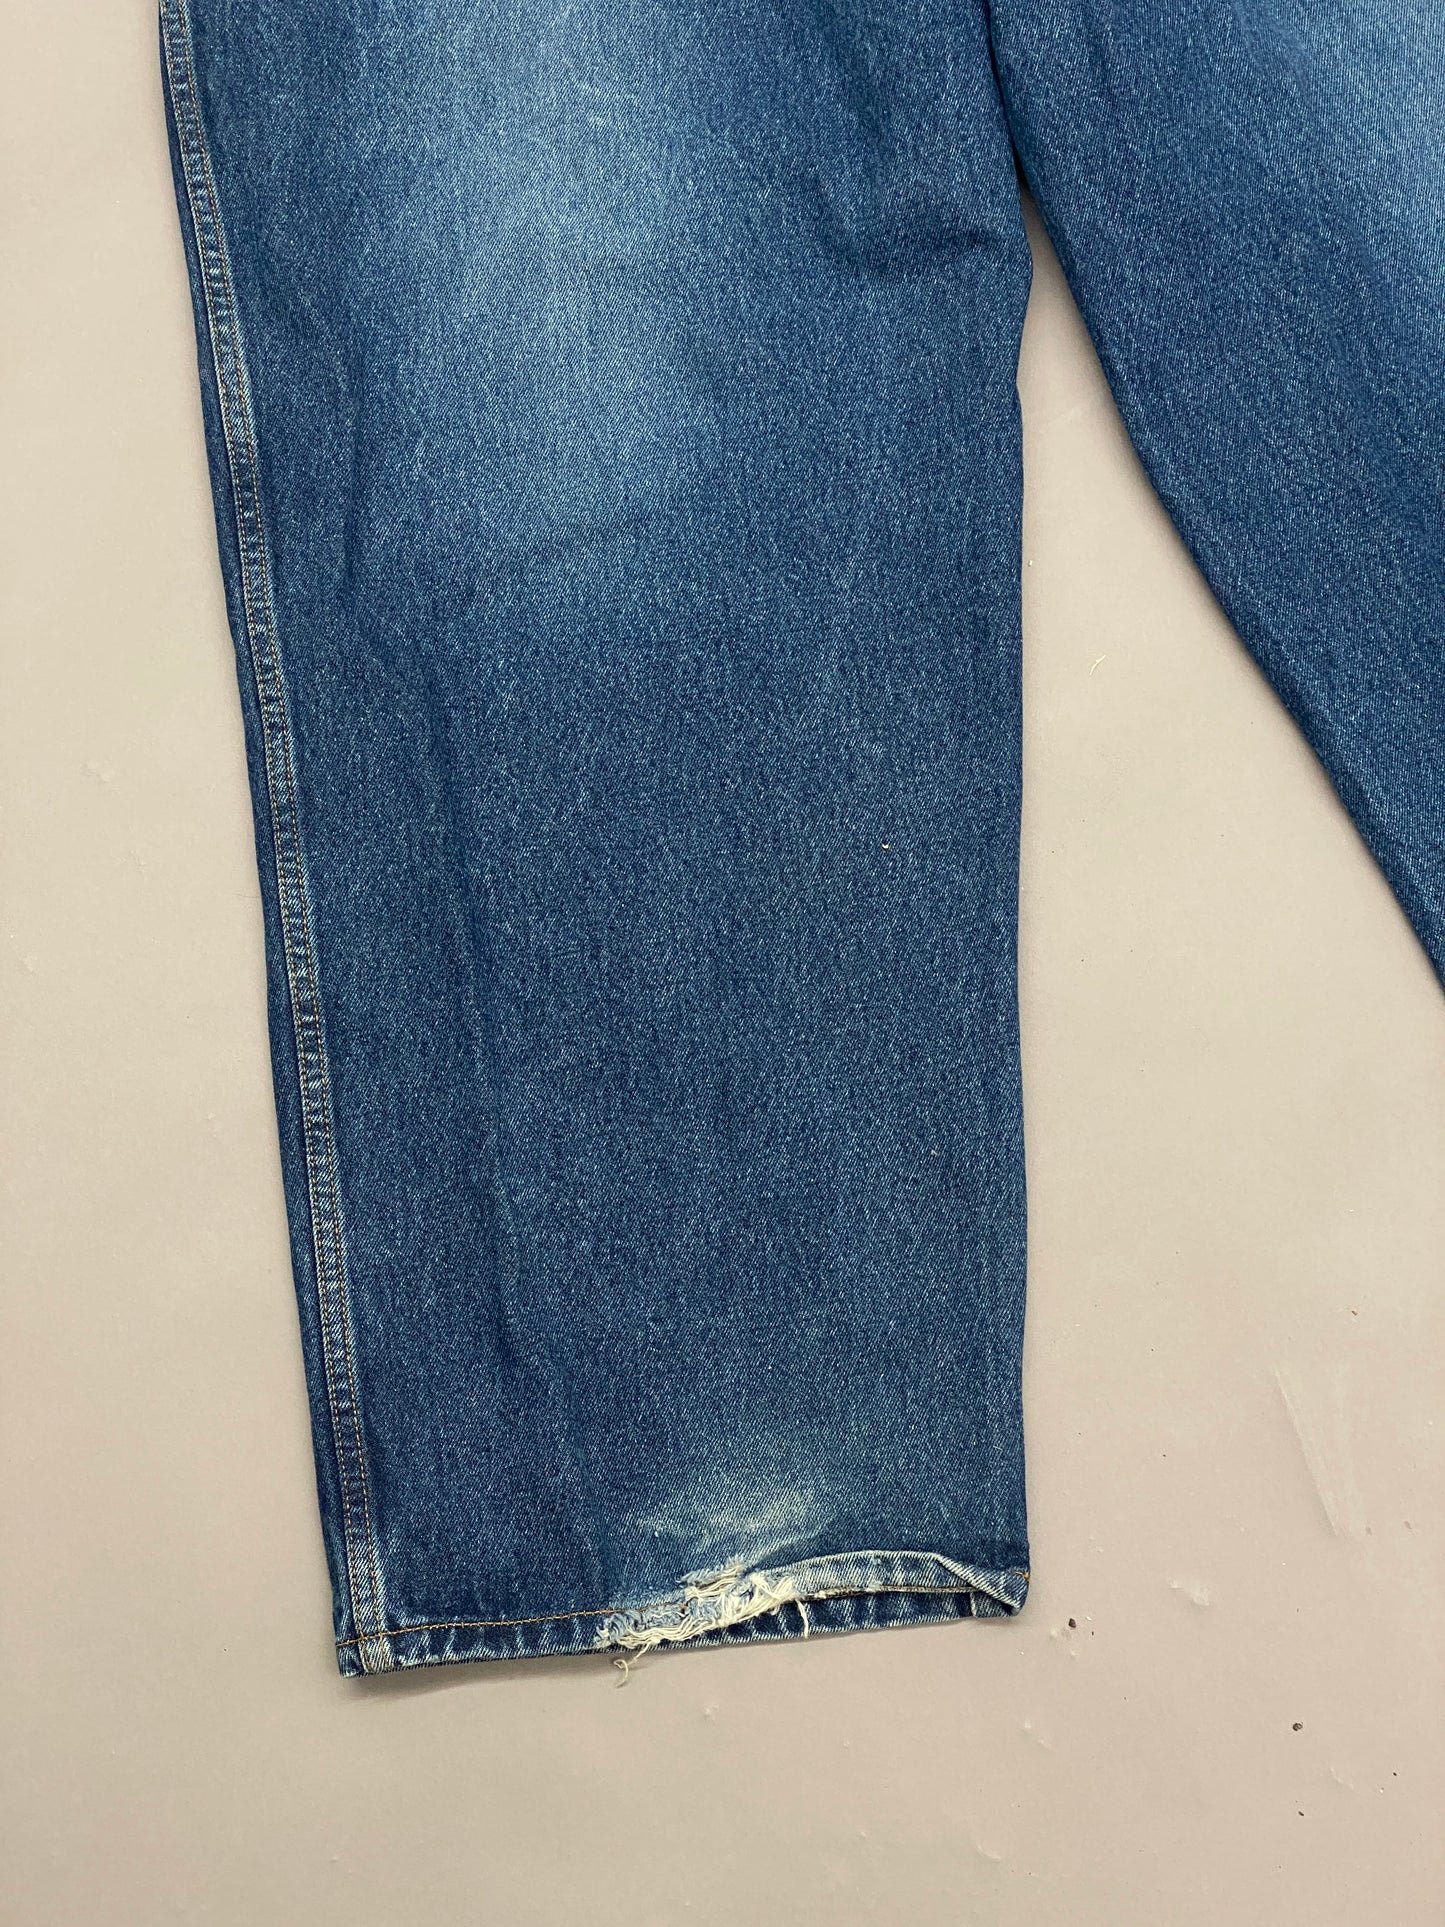 Jeans Interstate Baggy Vintage - 34